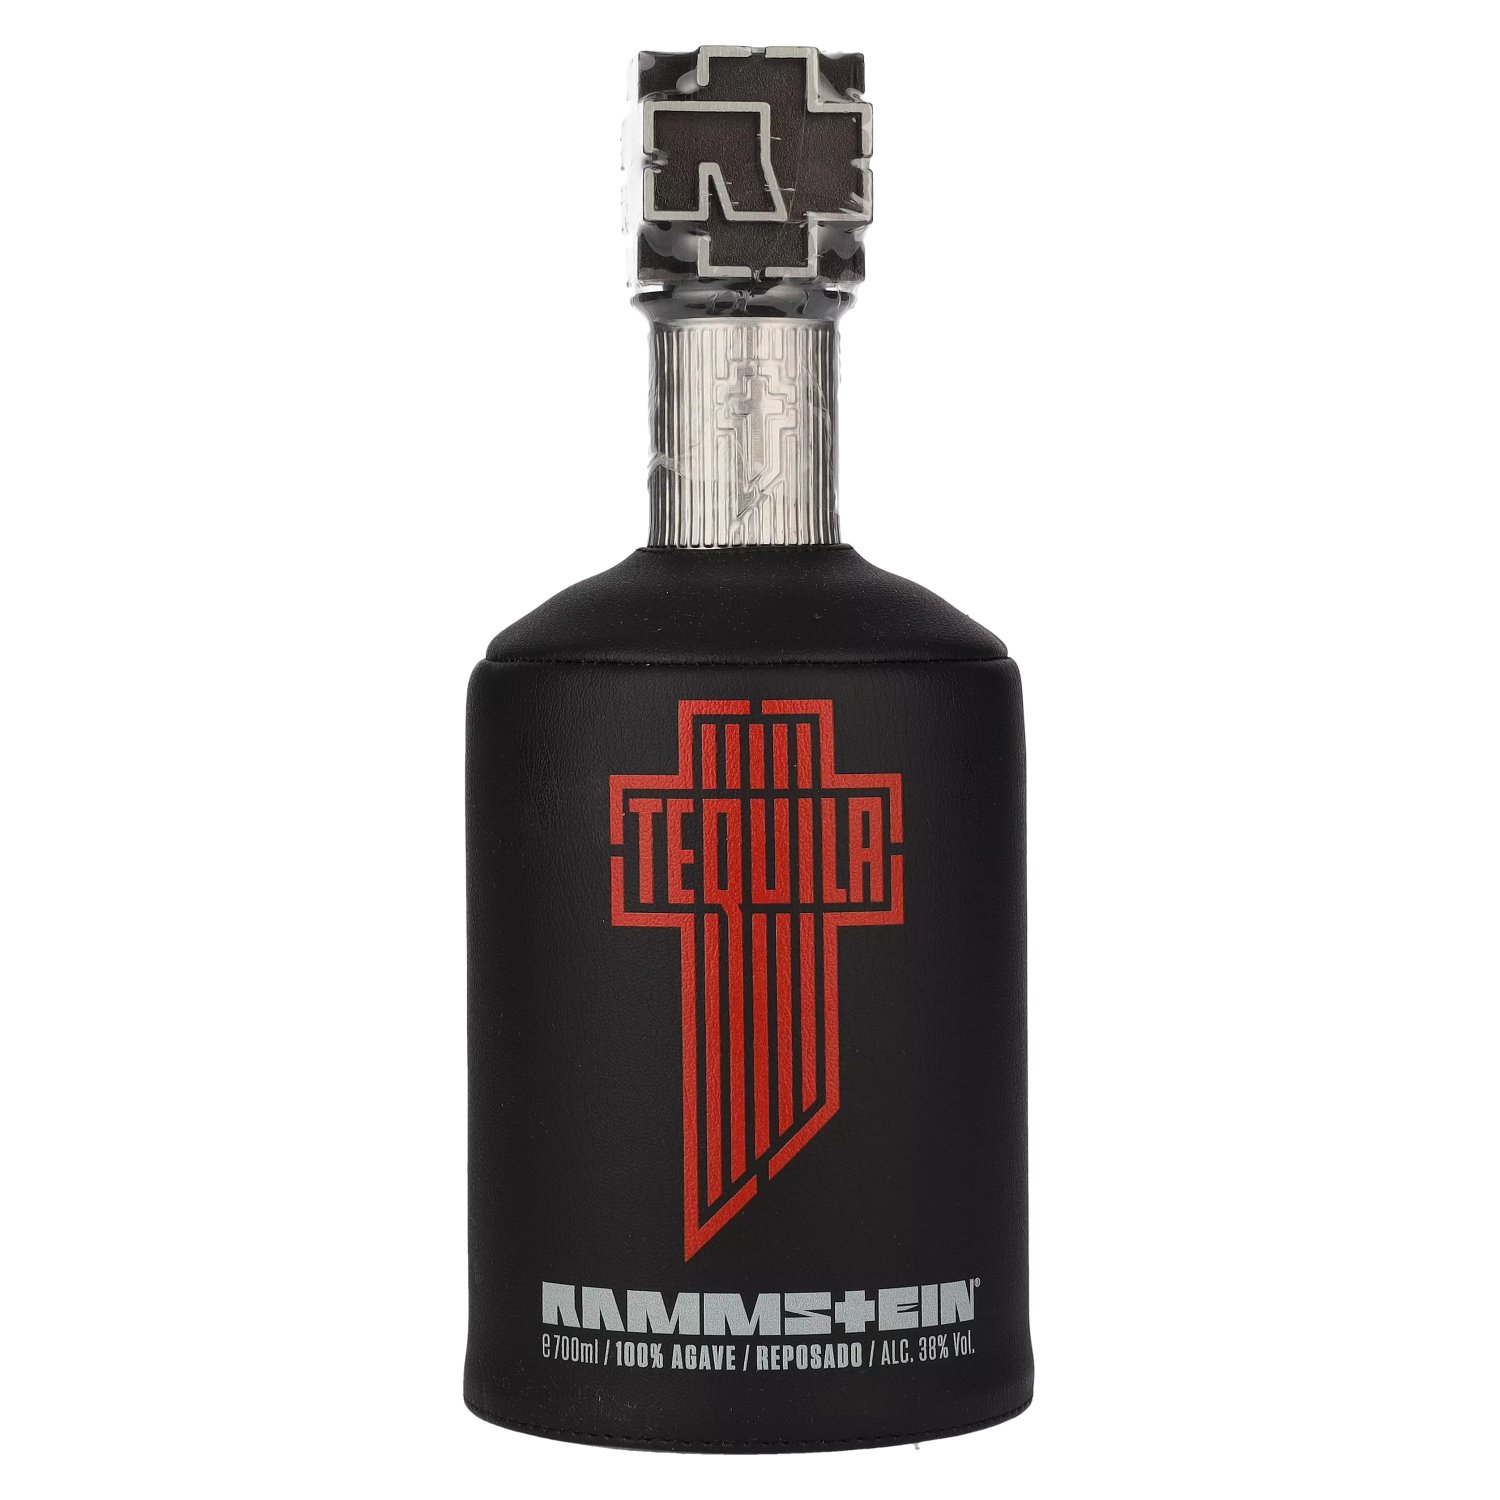 E-shop Rammstein Tequila Reposado 38% 0,7L